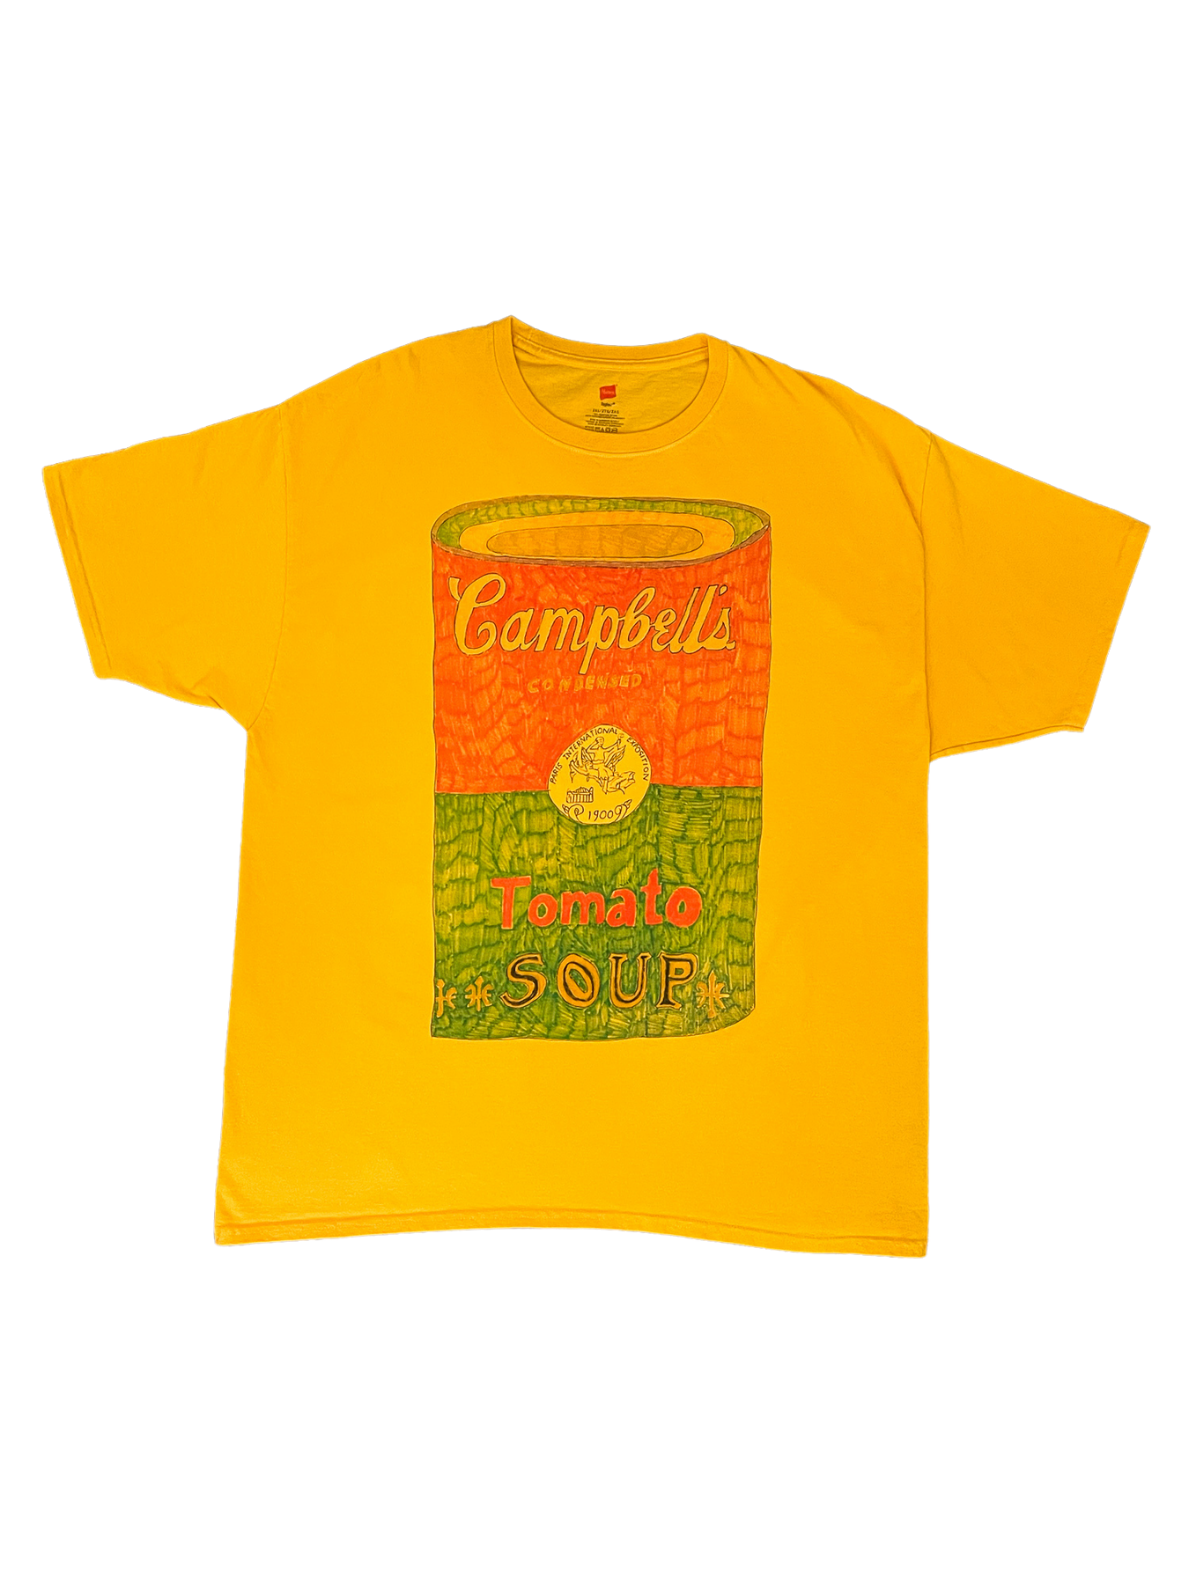 Sandw1tch x BRZ - Campbell's Soup Tee